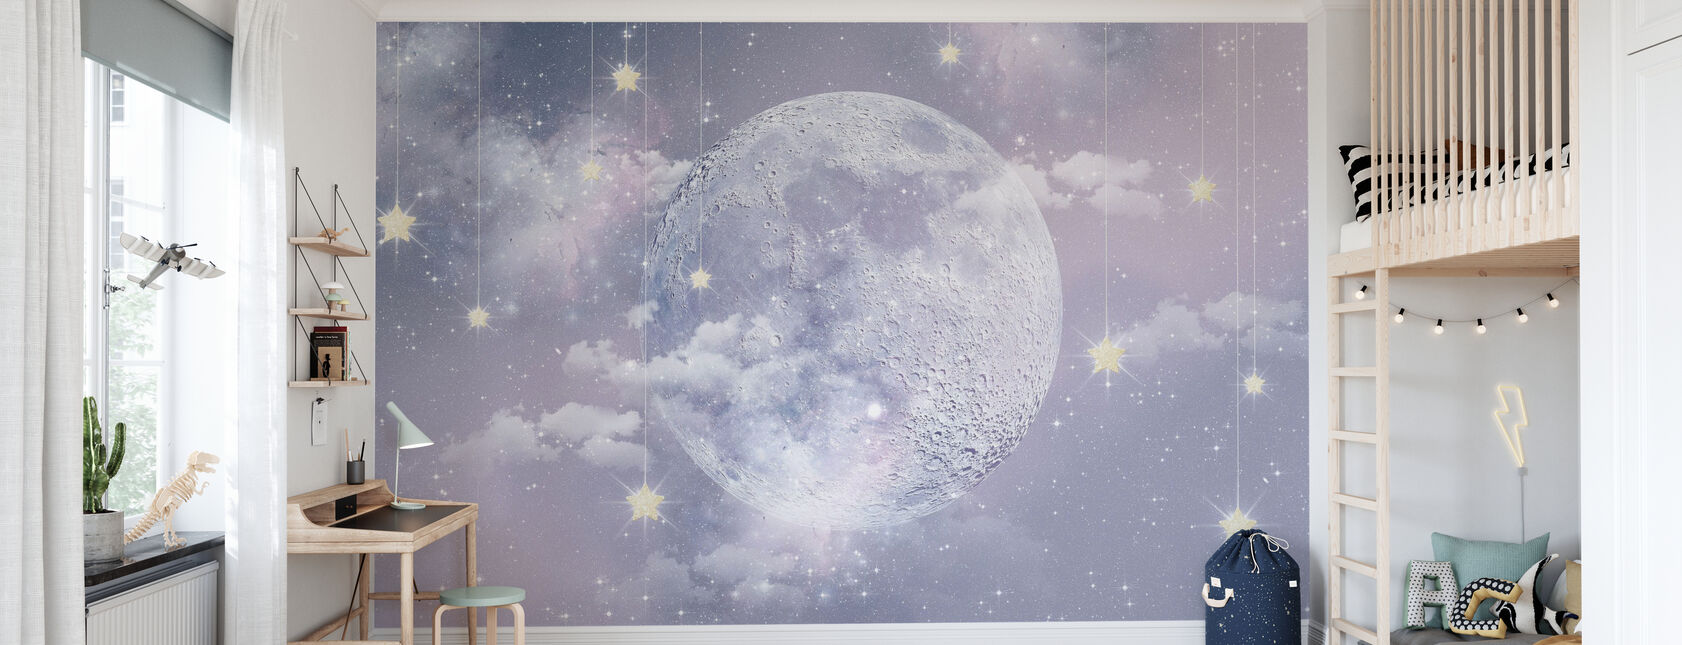 Månen med stjerner - Tapet - Barnerom